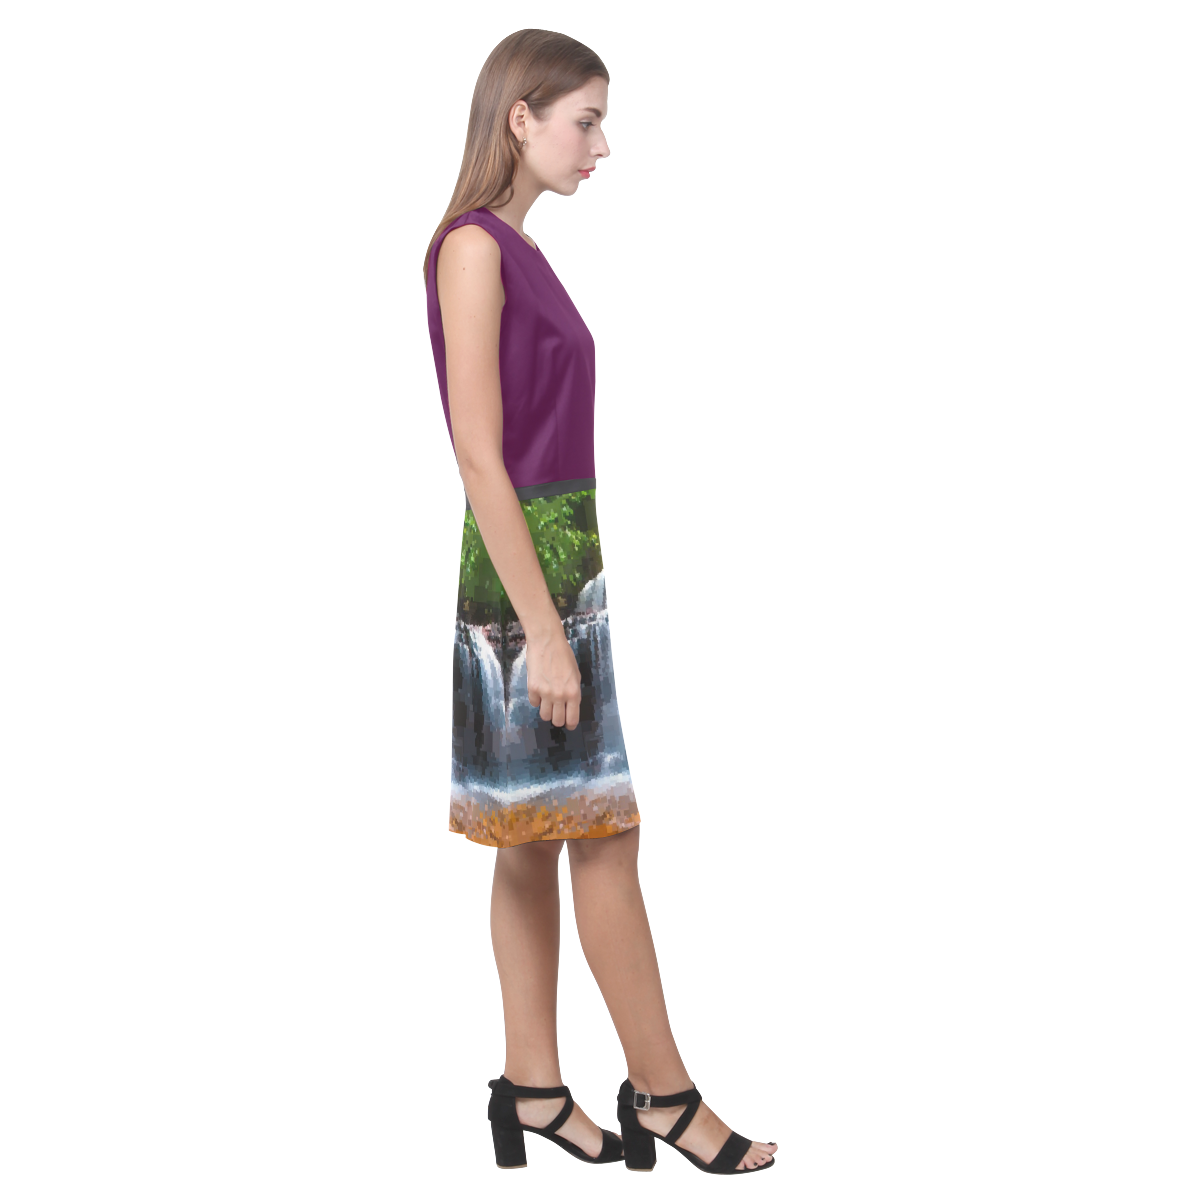 Blackberry and Pixel Waterfall Eos Women's Sleeveless Dress (Model D01)